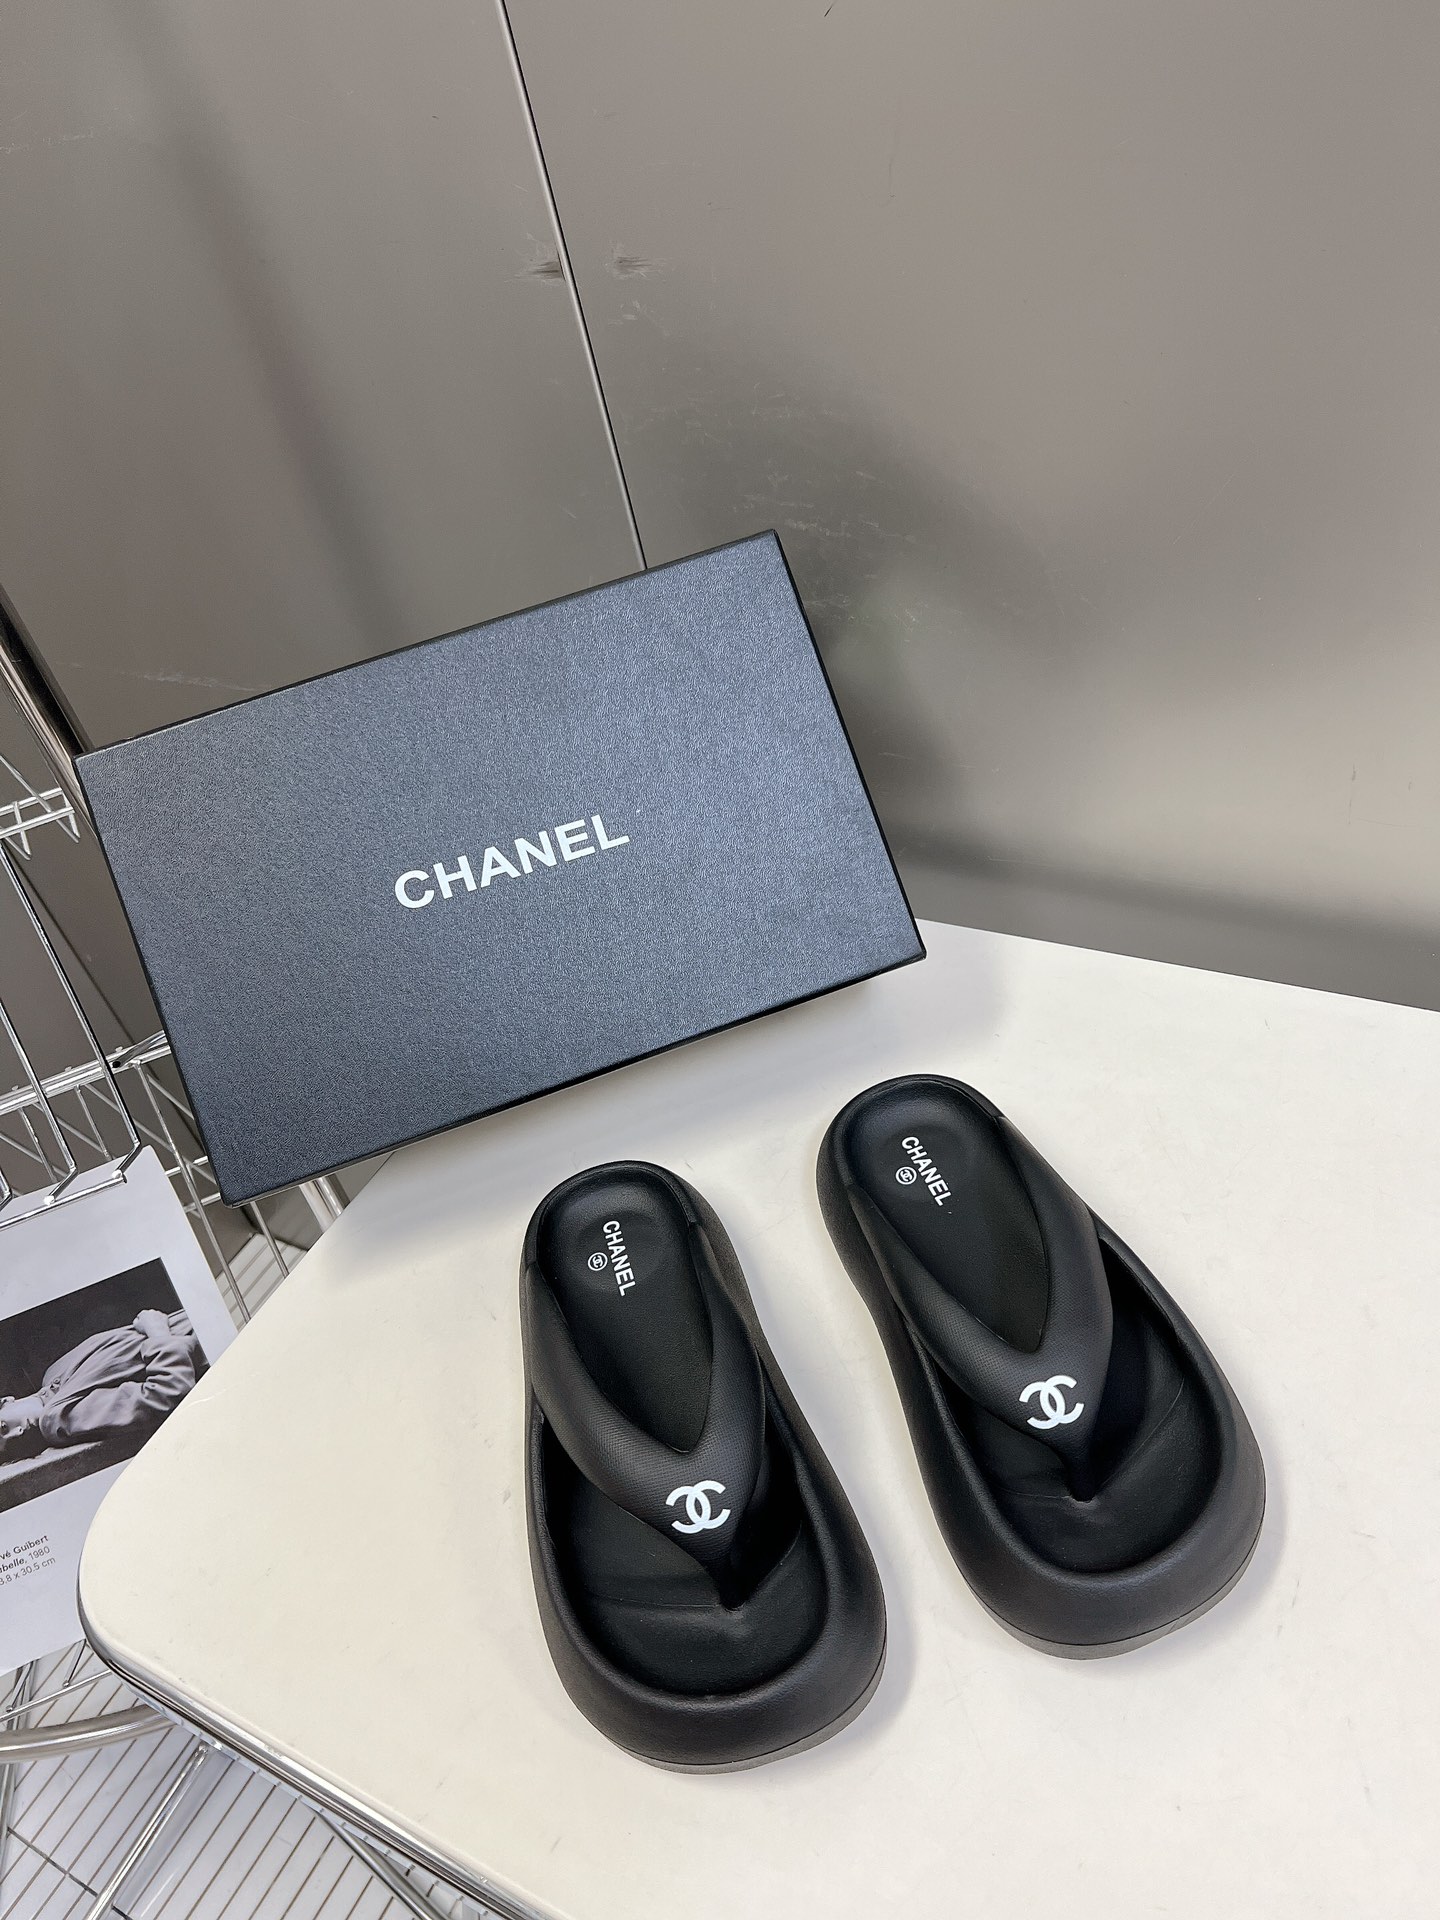 Chanel Shoes Flip Flops Slippers High Quality Designer
 Black Spring/Summer Collection Fashion